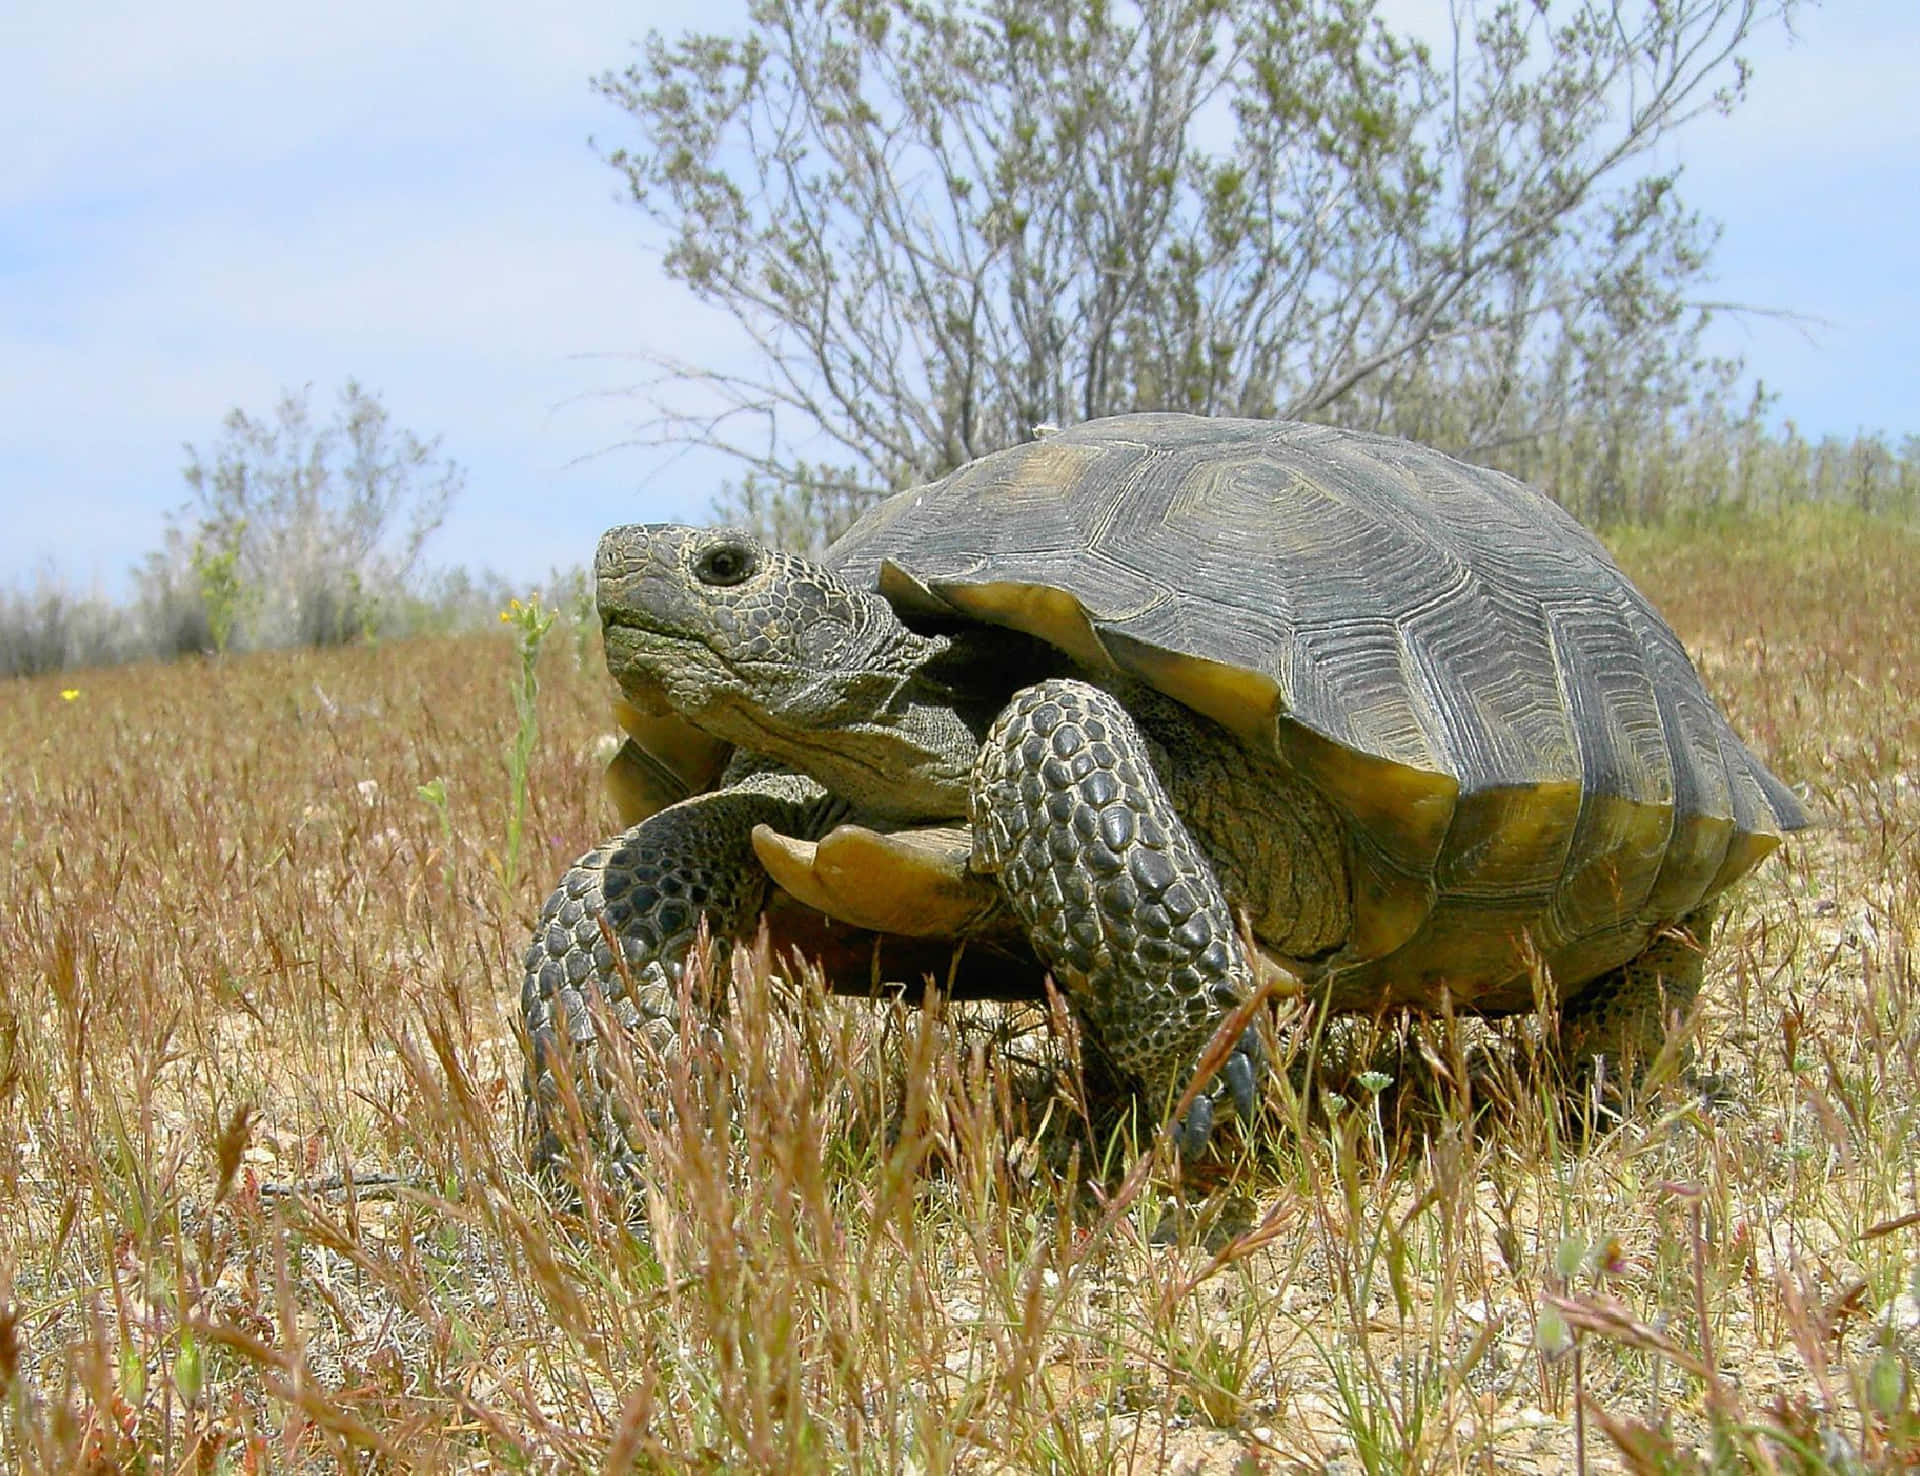 Beautiful Tortoise Walking in its Natural Habitat